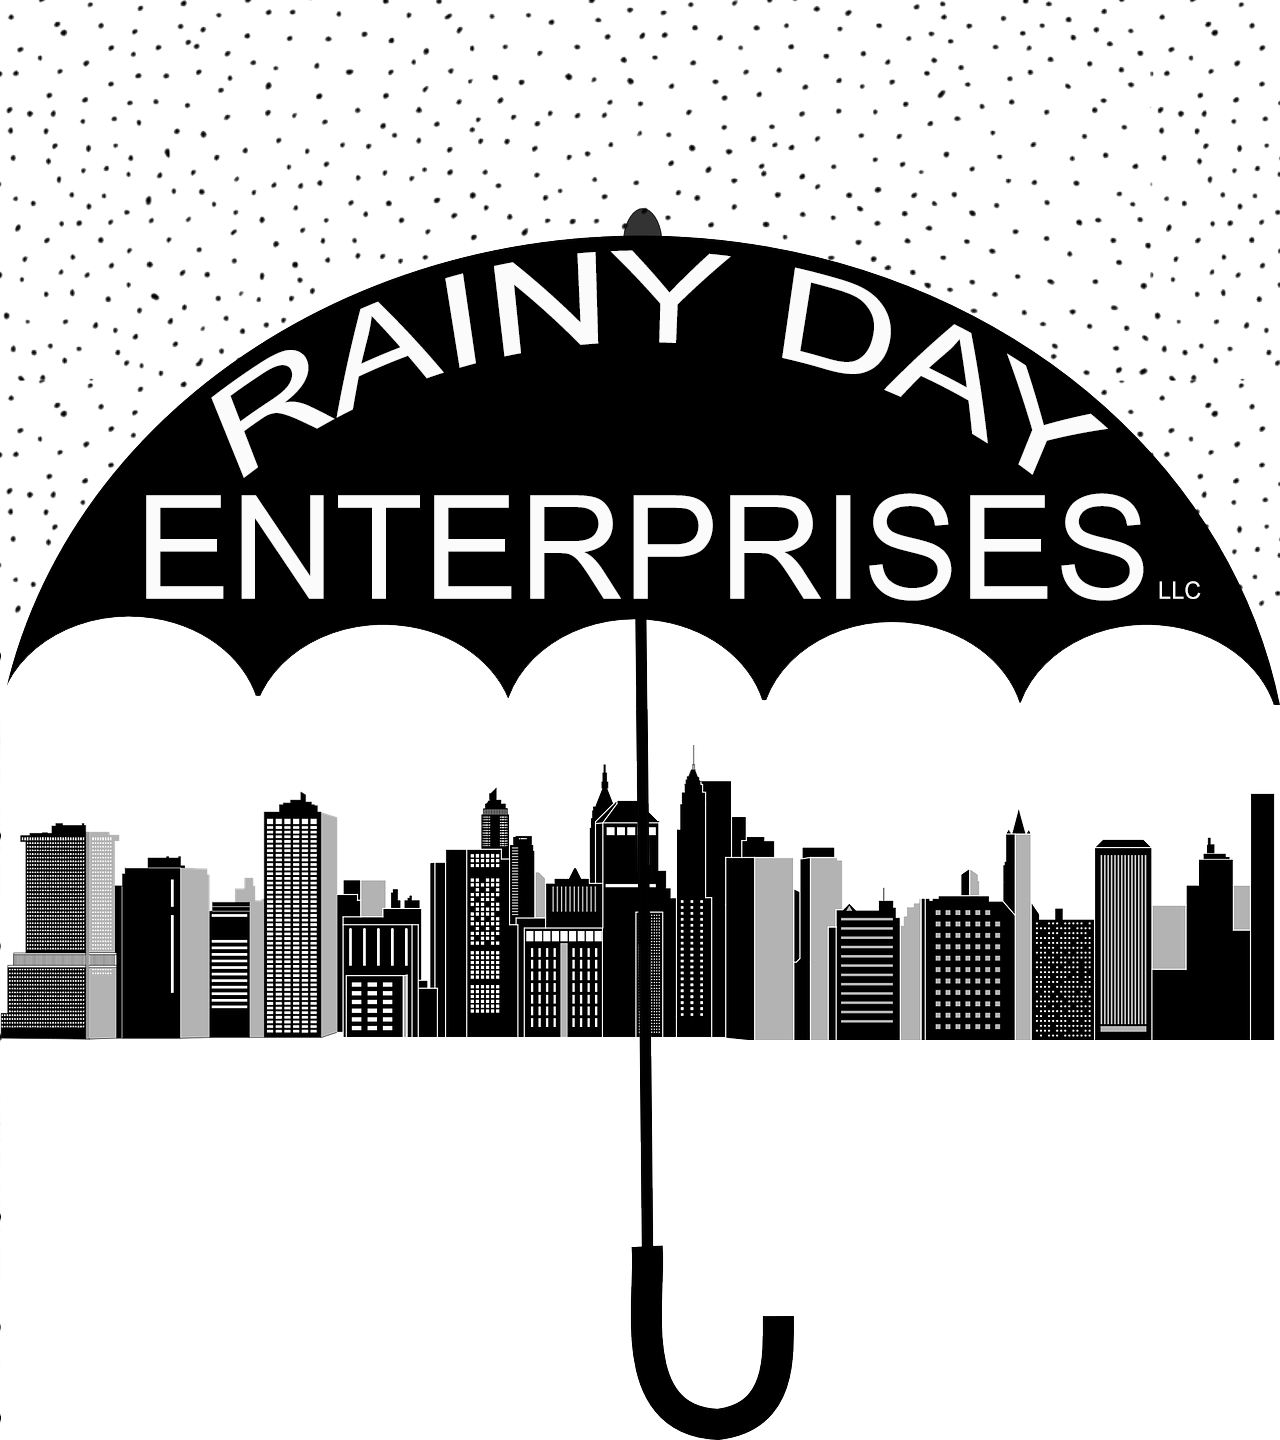 Rainy Day Enterprises